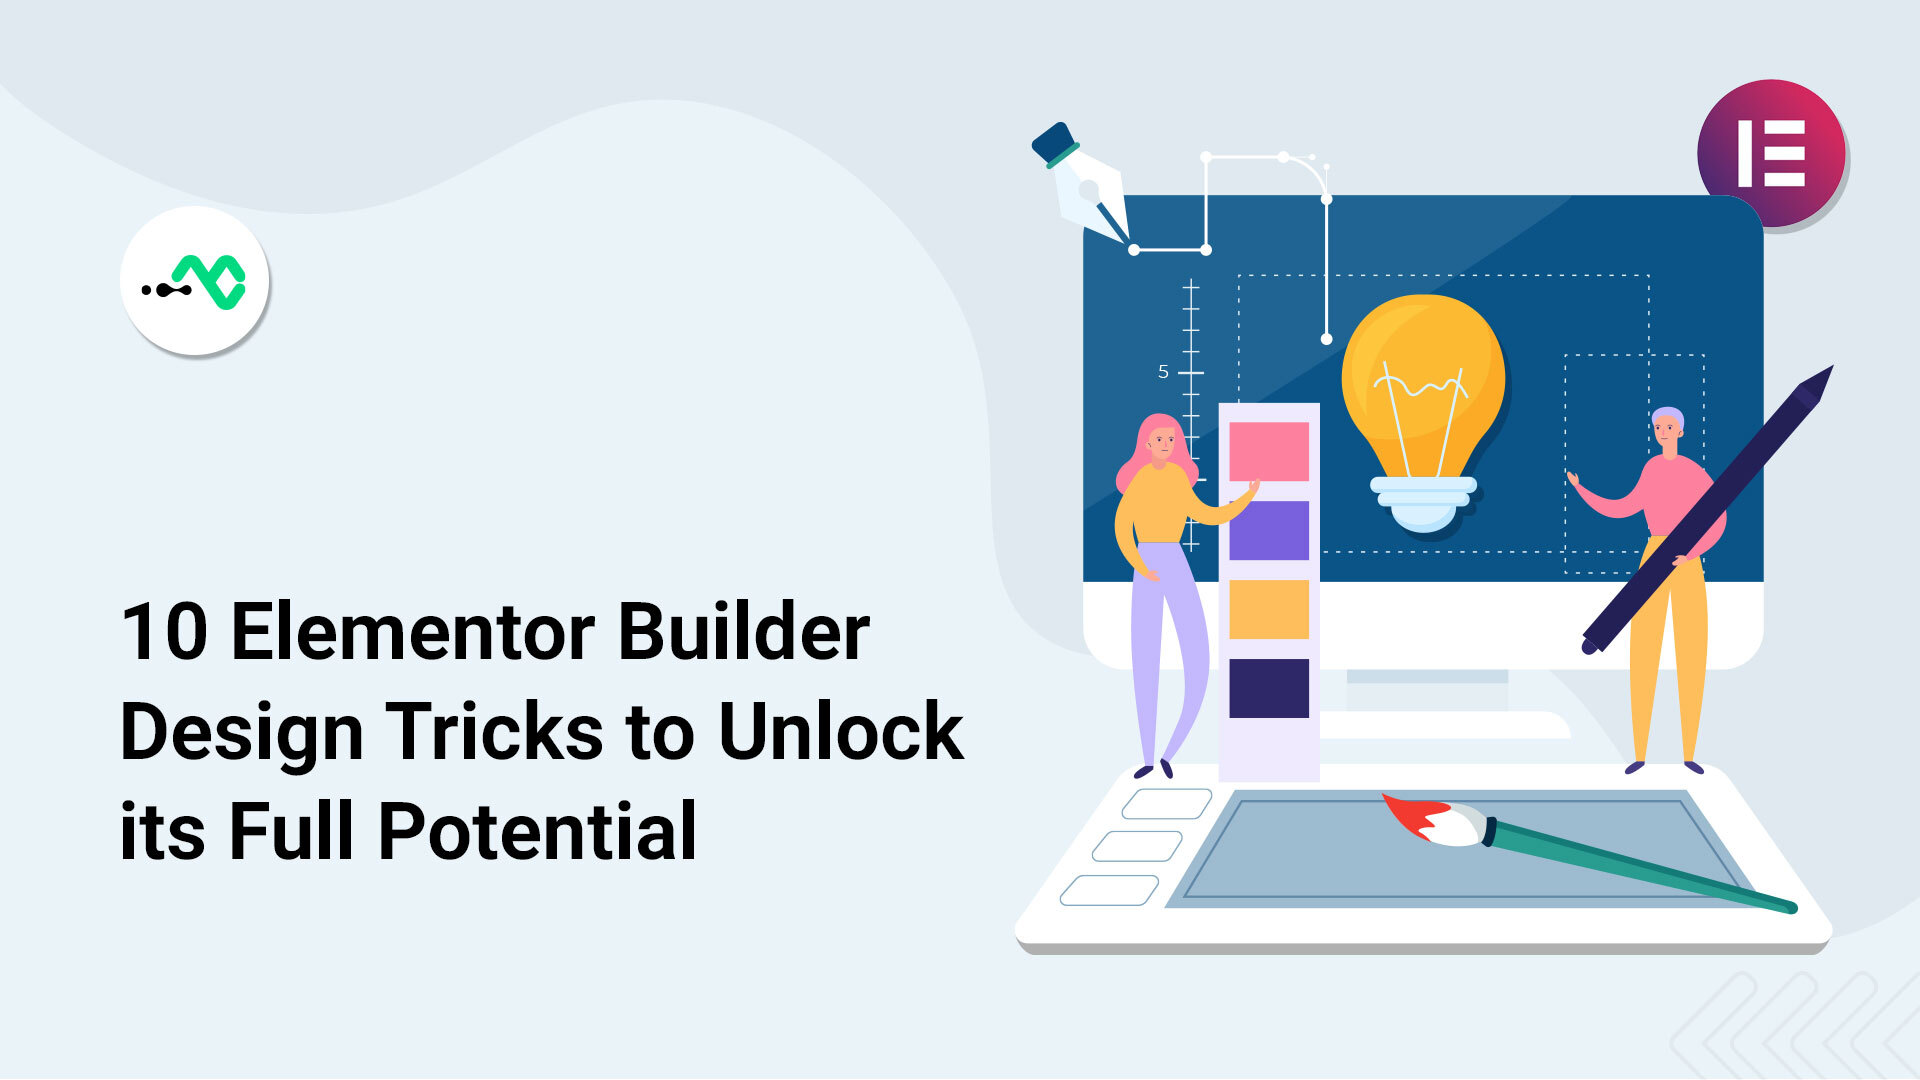 10 Elementor Builder Design Tricks to Unlock its Full Potential